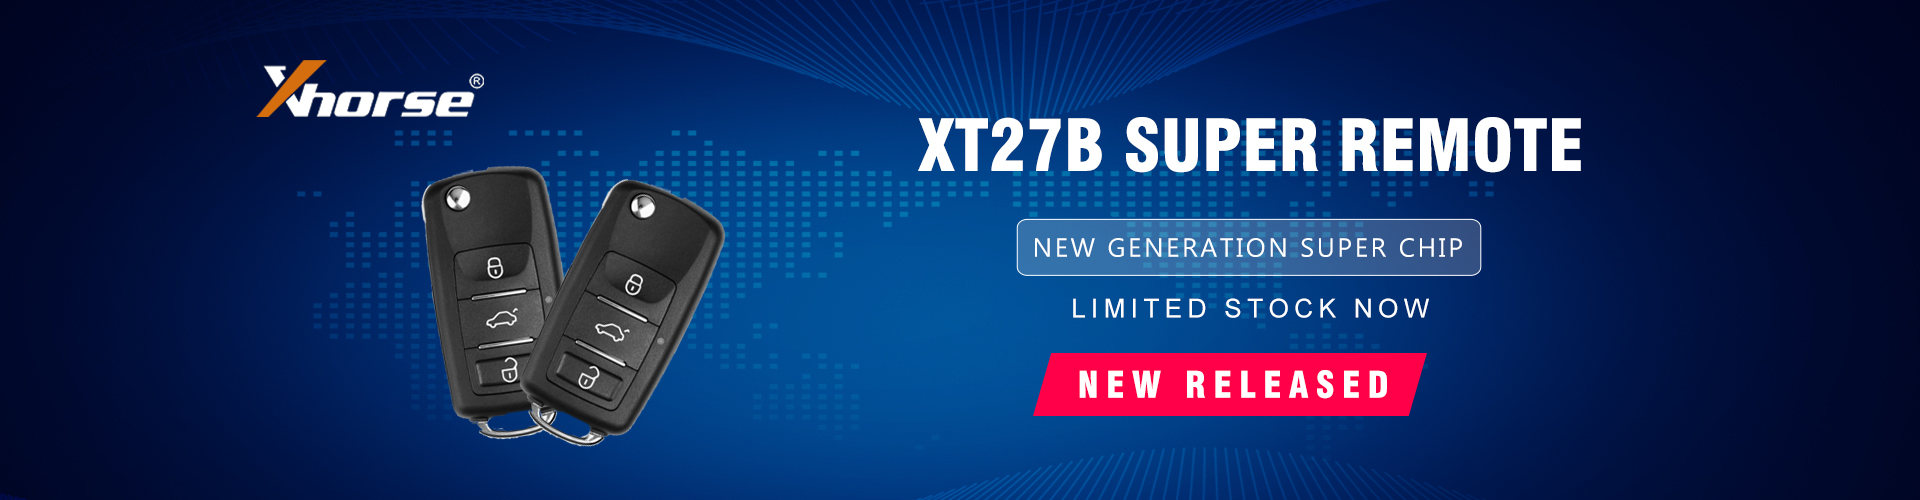 New XT27B super remote